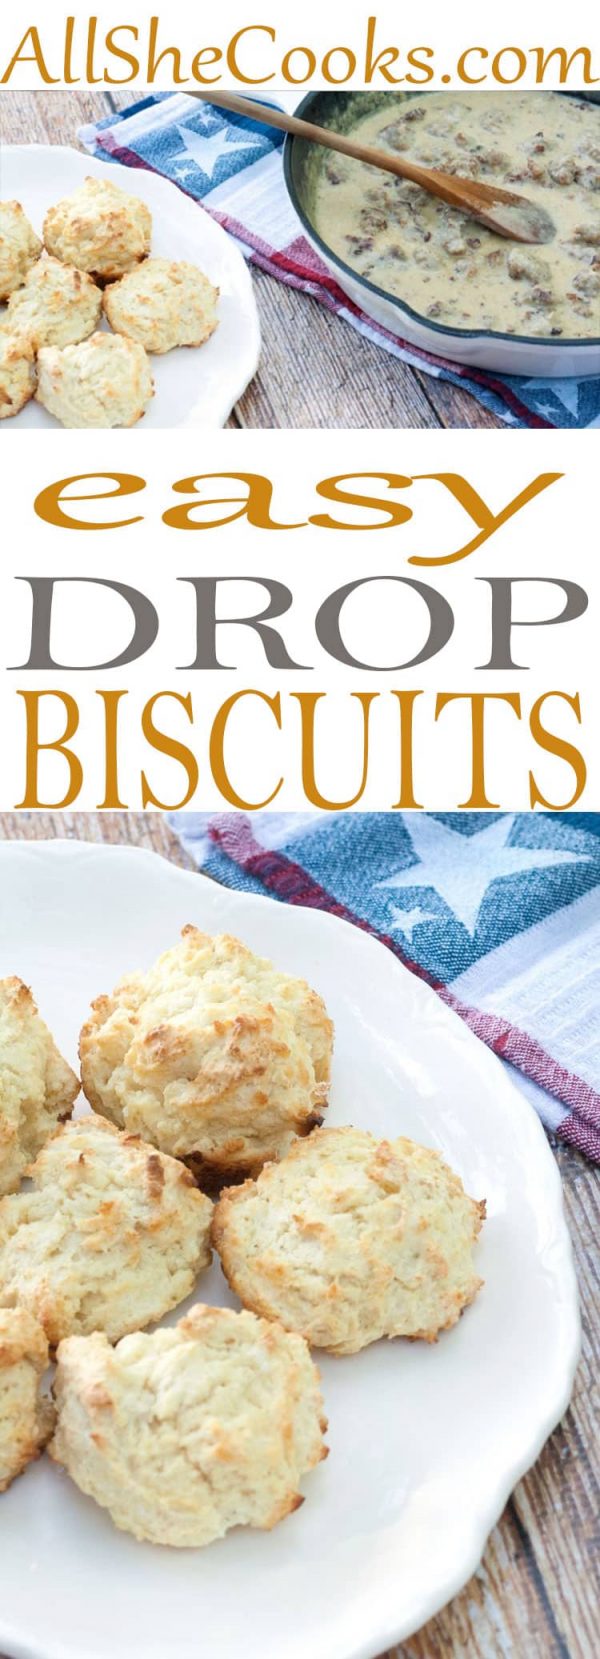 lodge drop biscuit recipe